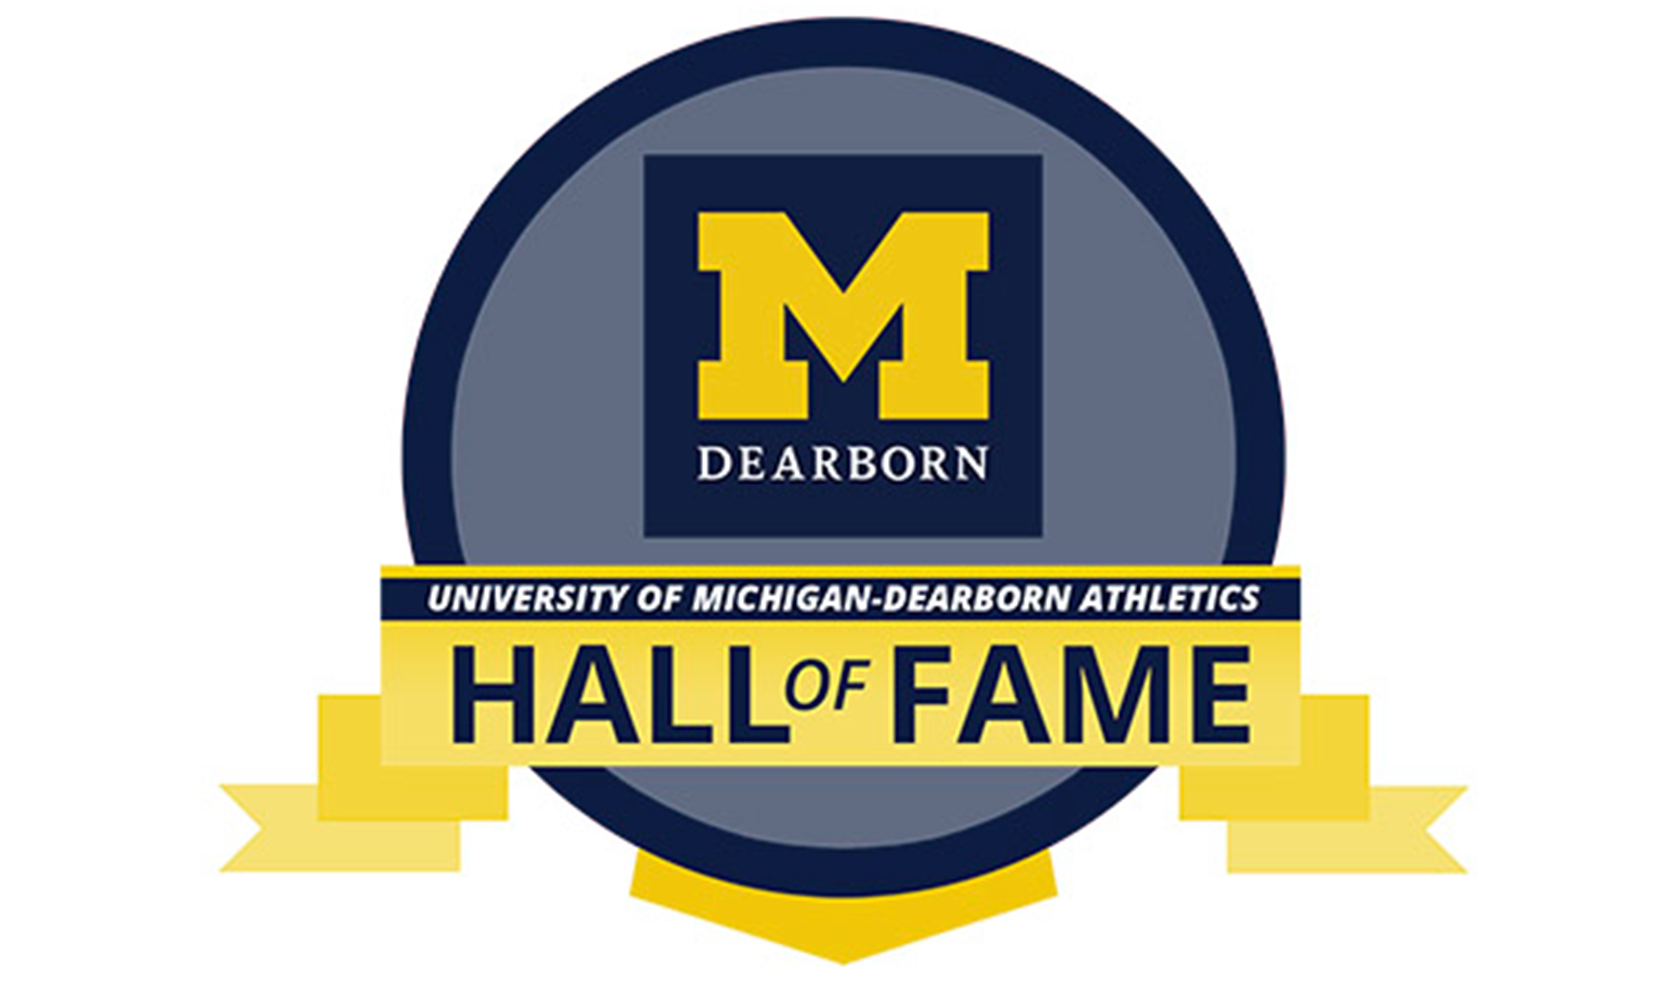 UM-Dearborn Athletics Hall of Fame logo